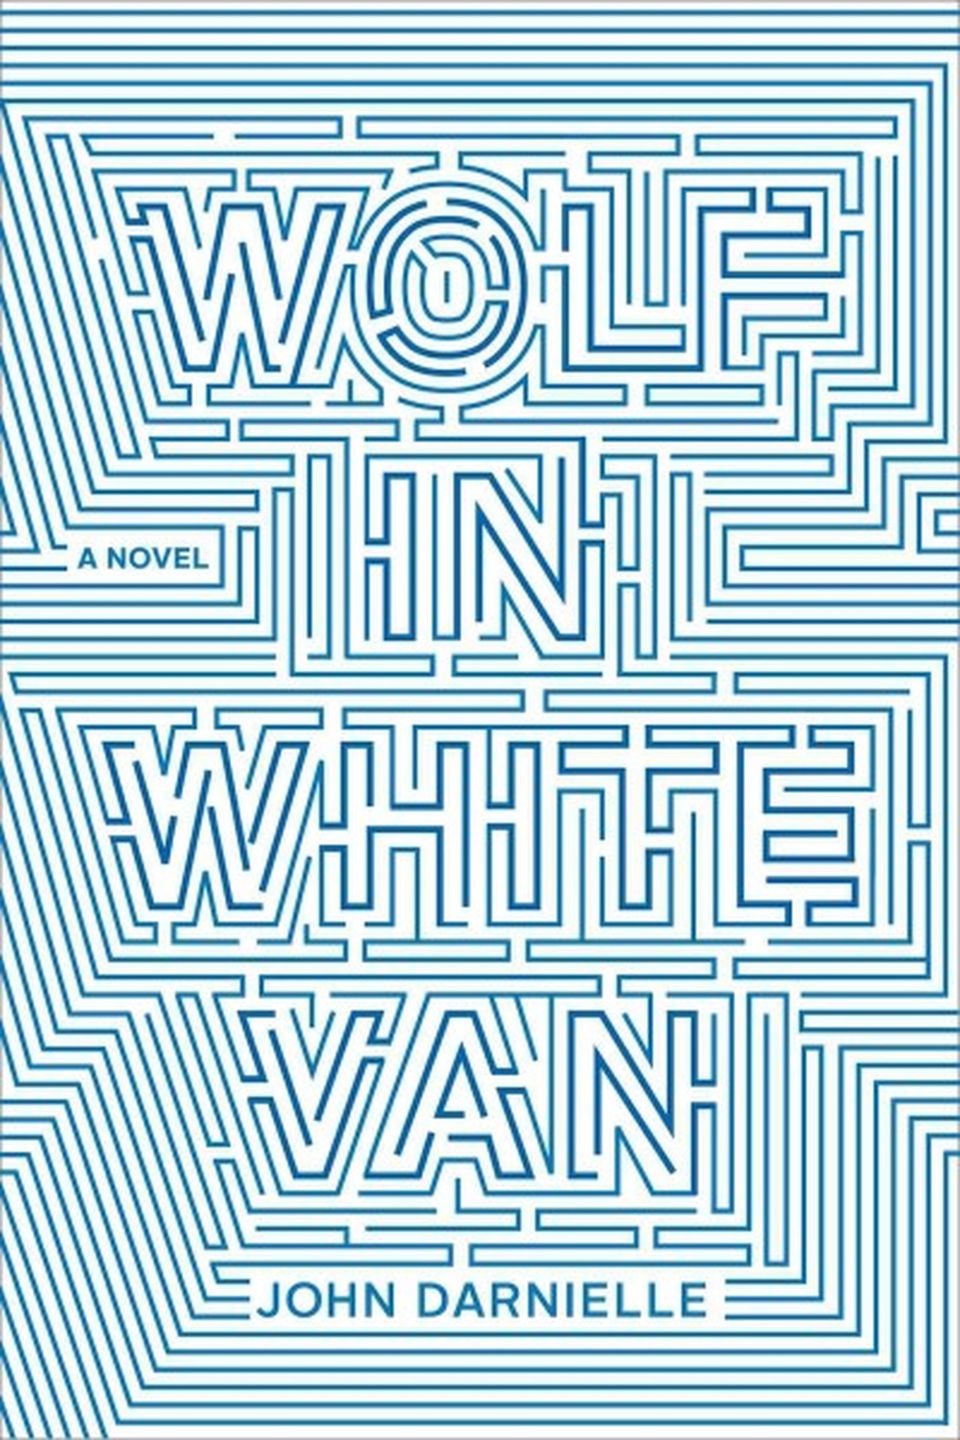 'Wolf In White Van' by John Darnielle